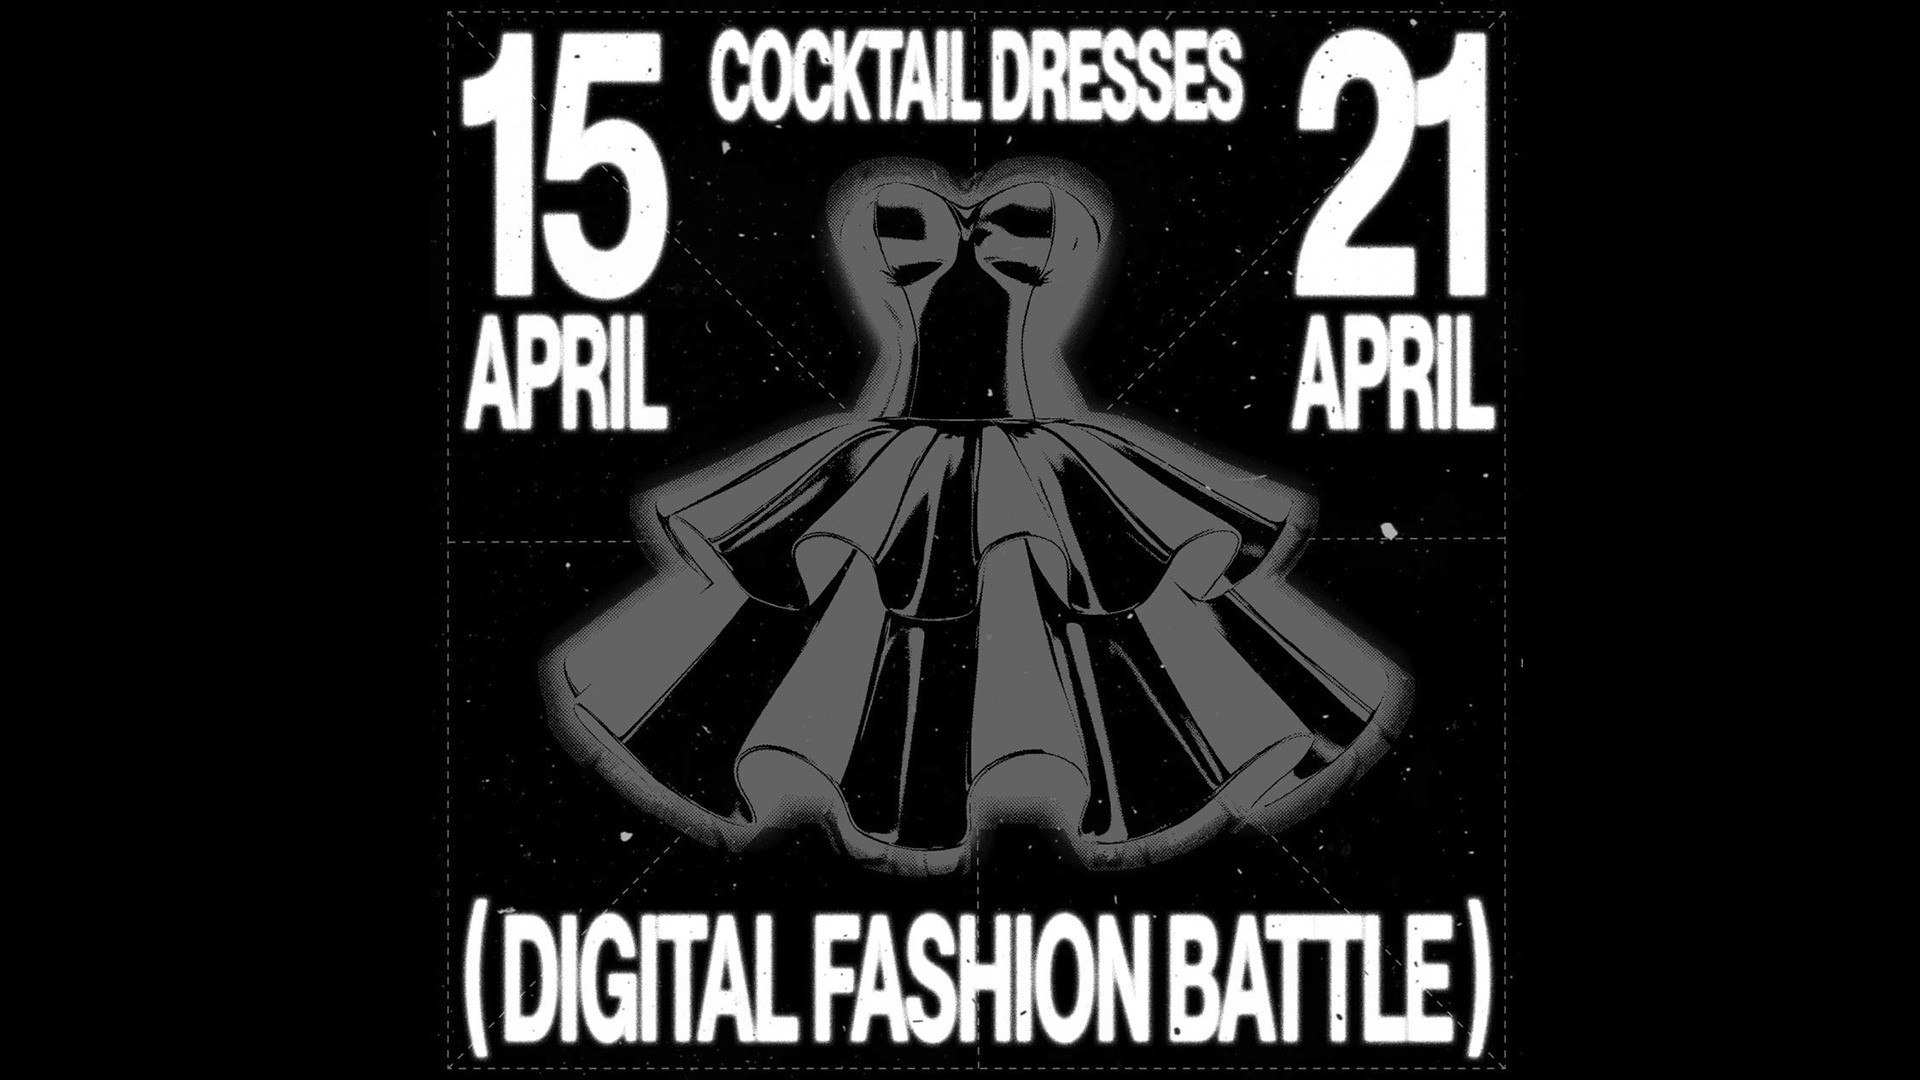 DIGITAL FASHION BATTLE — W2 — COCKTAIL DRESS!